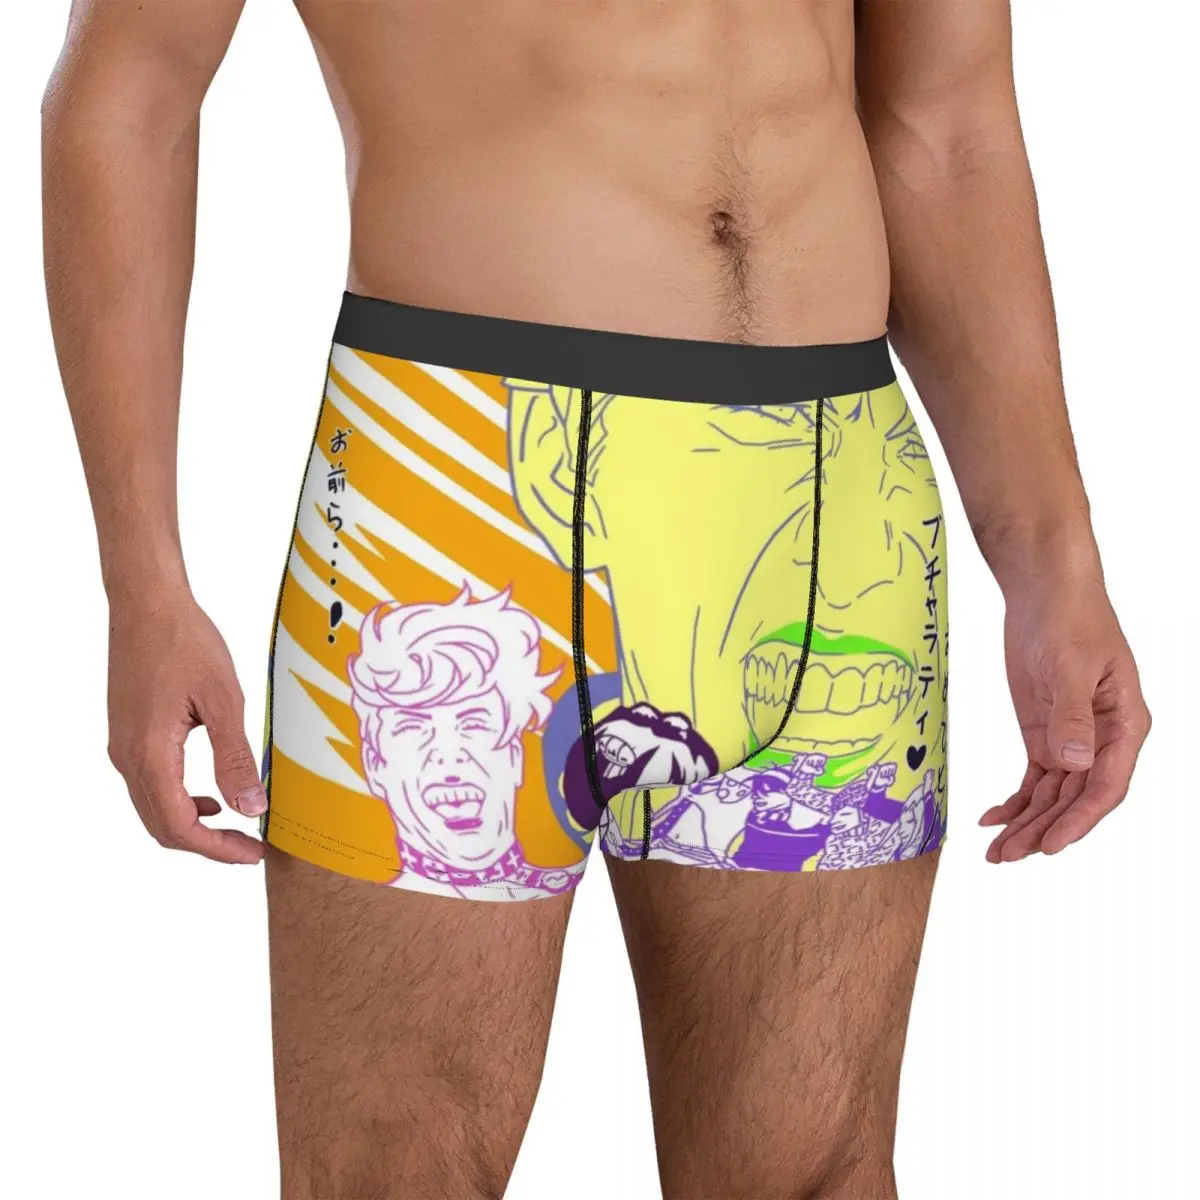 

Jojo Bizarre Adventure Underwear Meme Bucciarati Laughing Tom Cruise Man Panties Elastic Boxershorts Shorts Briefs Plus Size 2XL